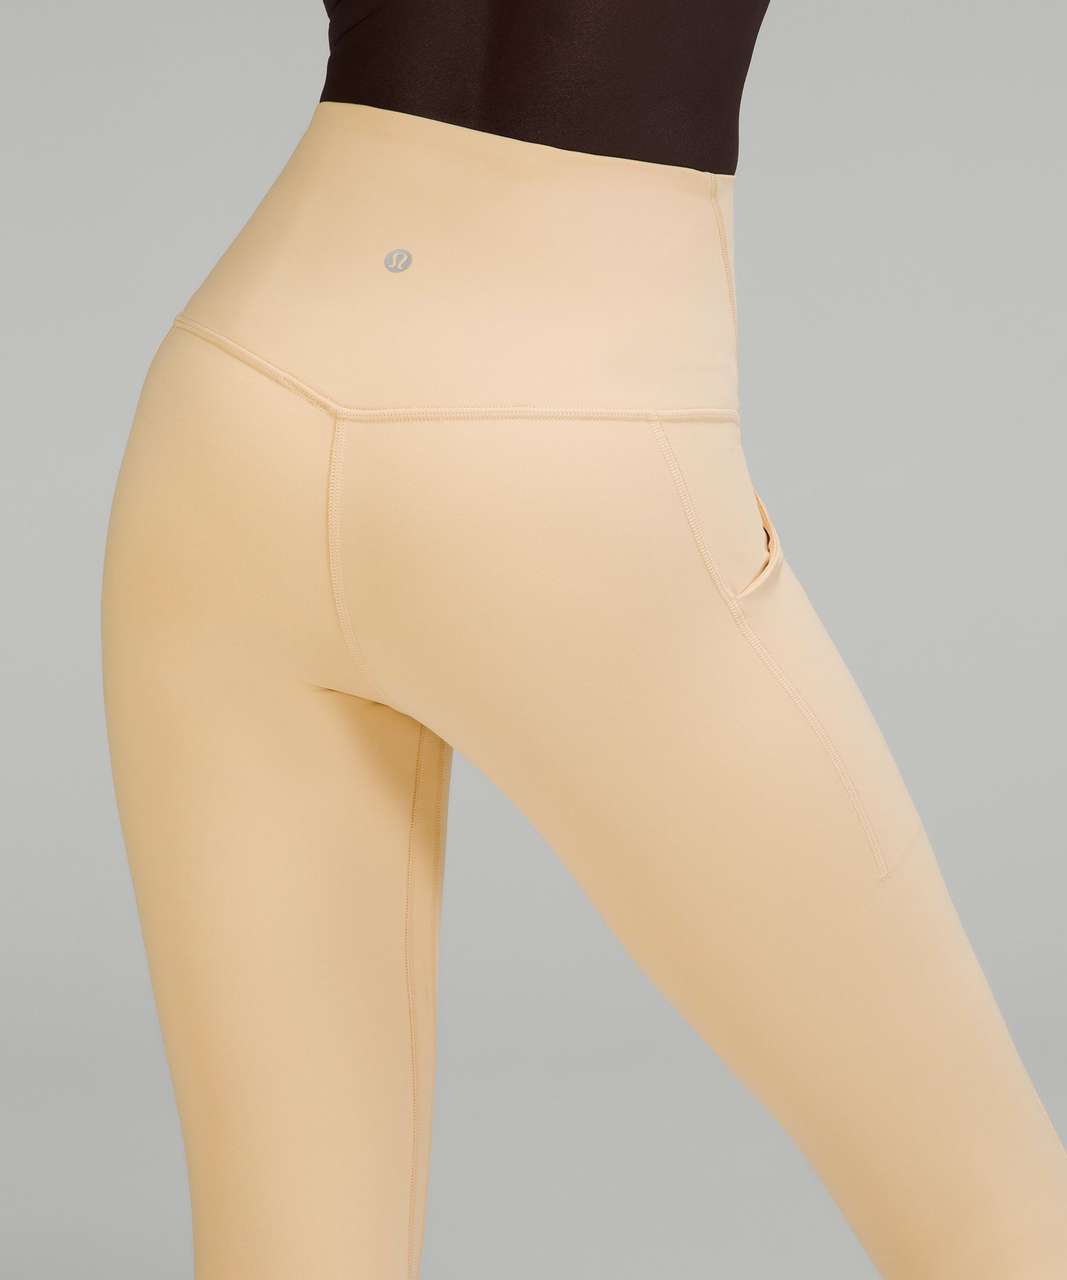 NWOT Lululemon Align High Rise Pant leggings with Pockets 25 Size